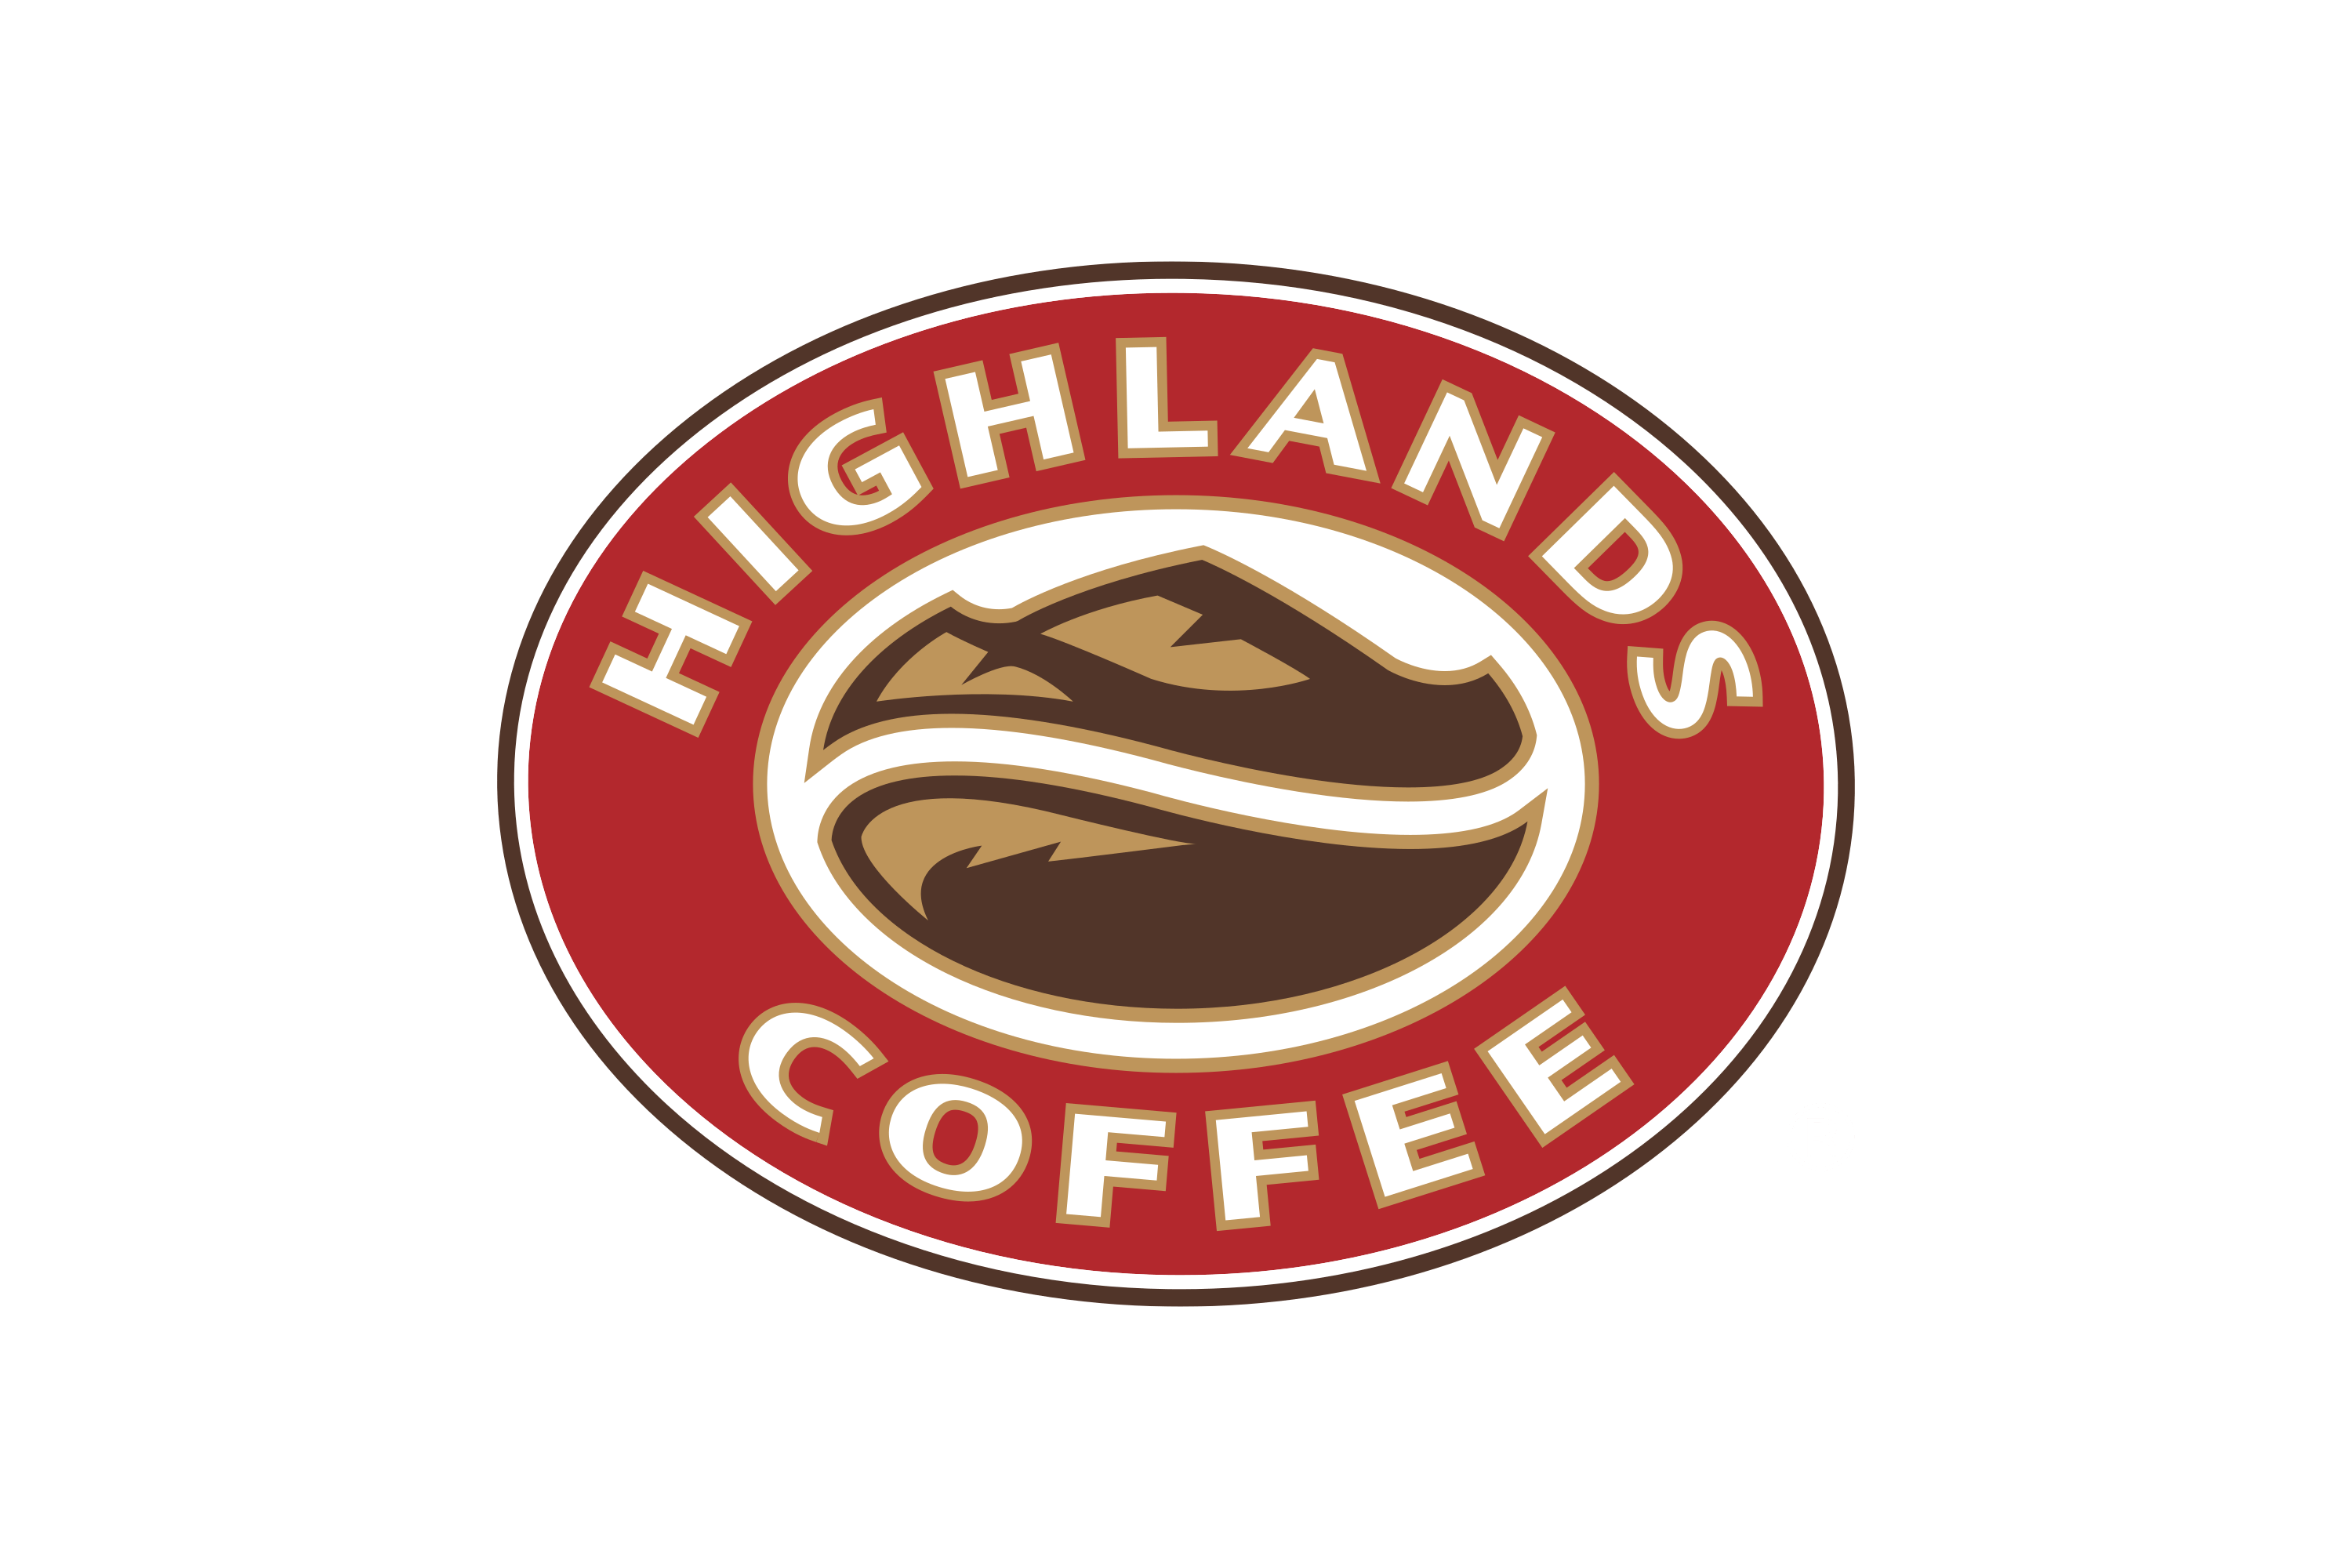 Download Highlands Coffee Logo in SVG Vector or PNG File Format - Logo.wine